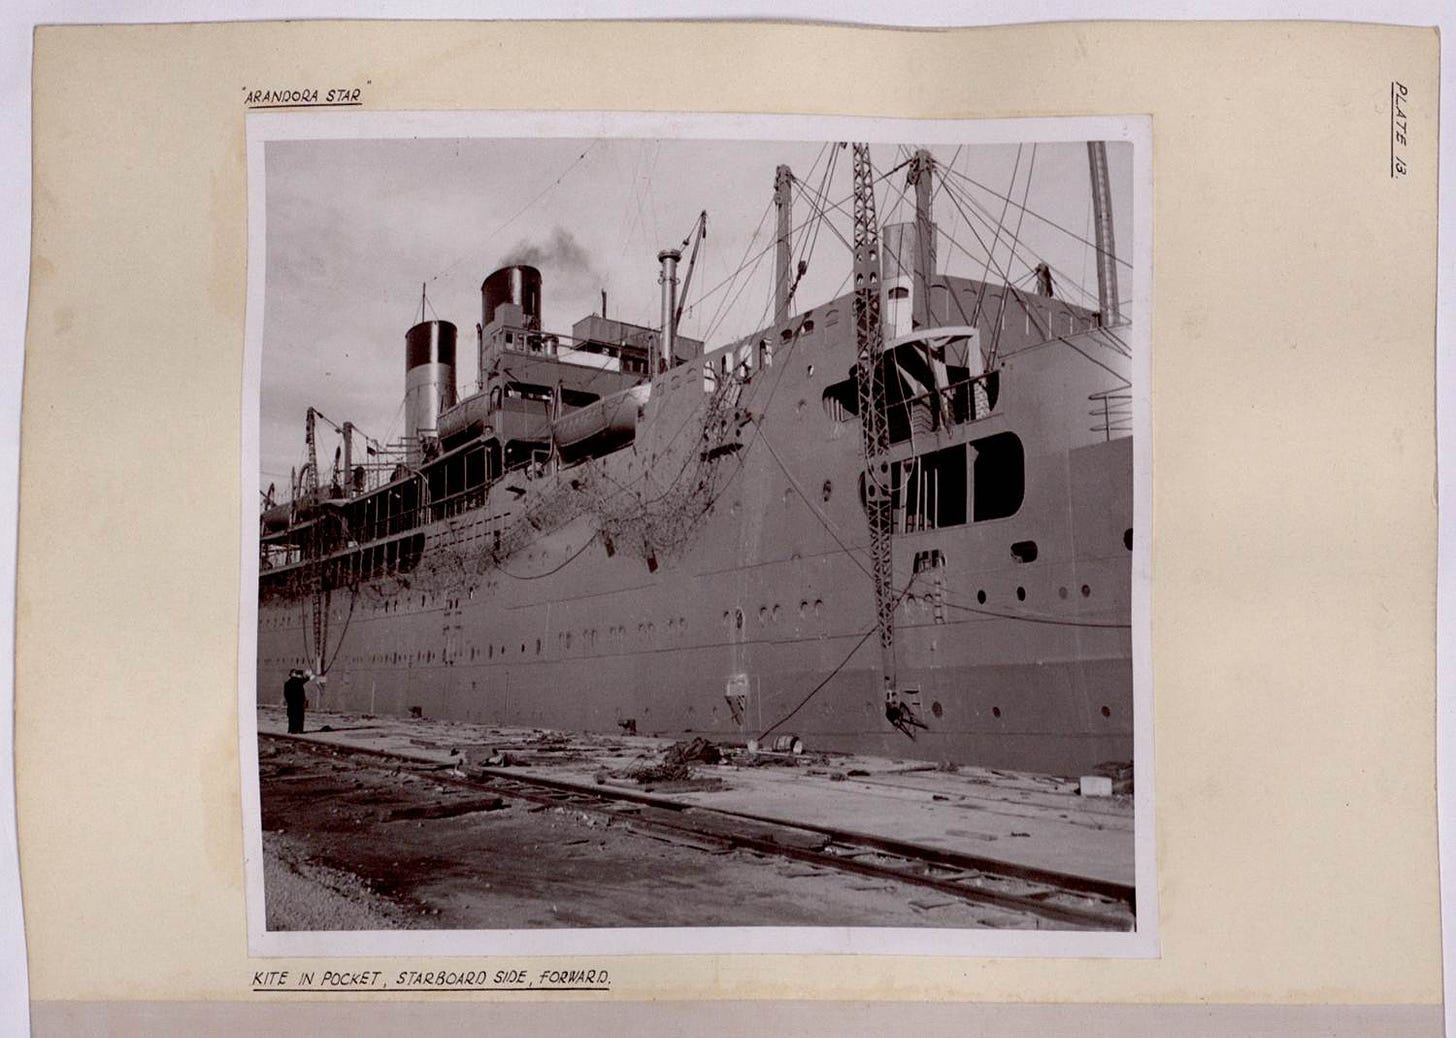 ADM 189/142 SS ARANDORA STAR, 1940